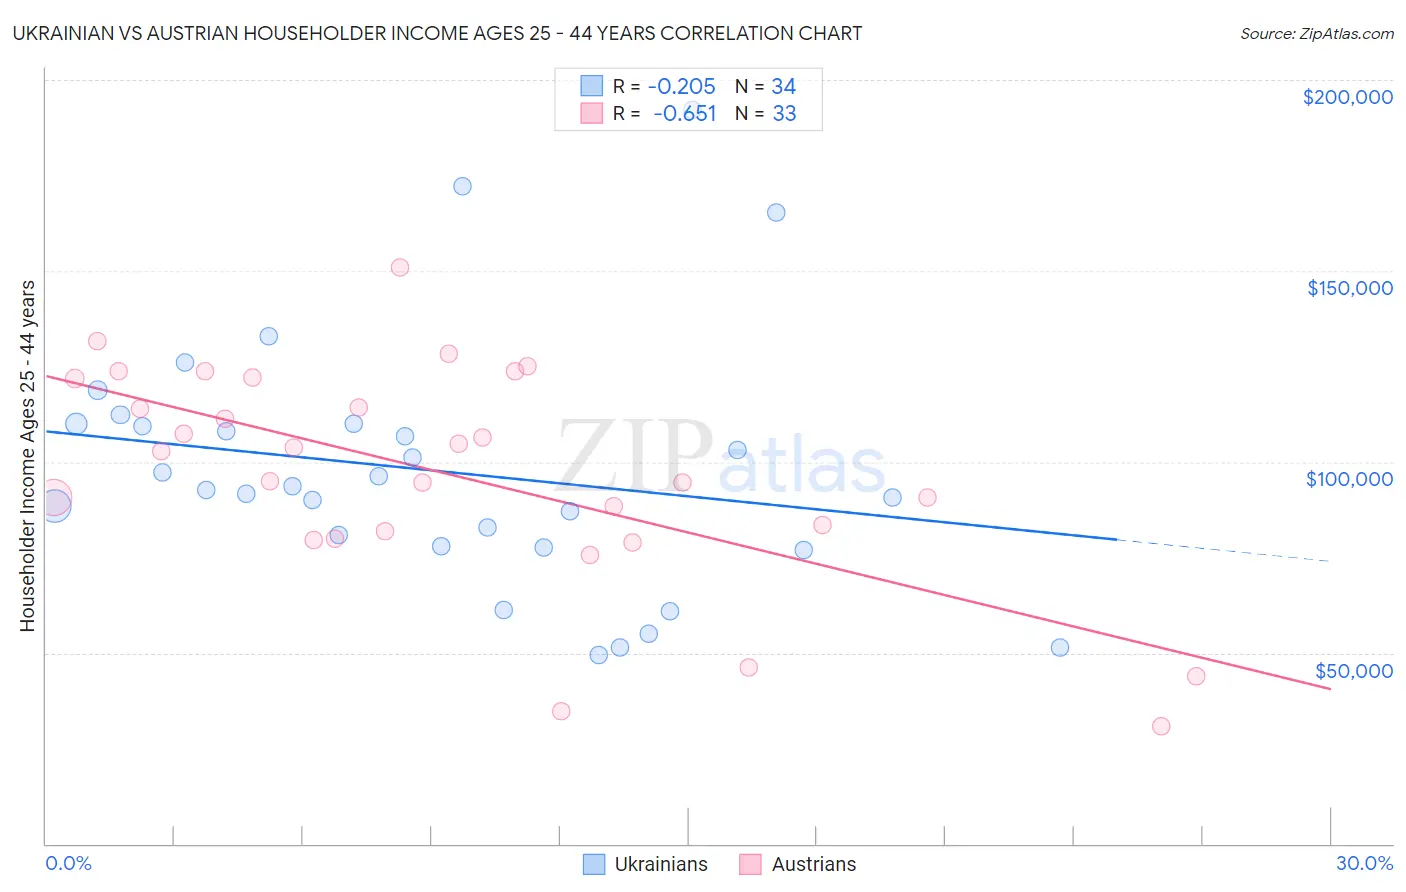 Ukrainian vs Austrian Householder Income Ages 25 - 44 years